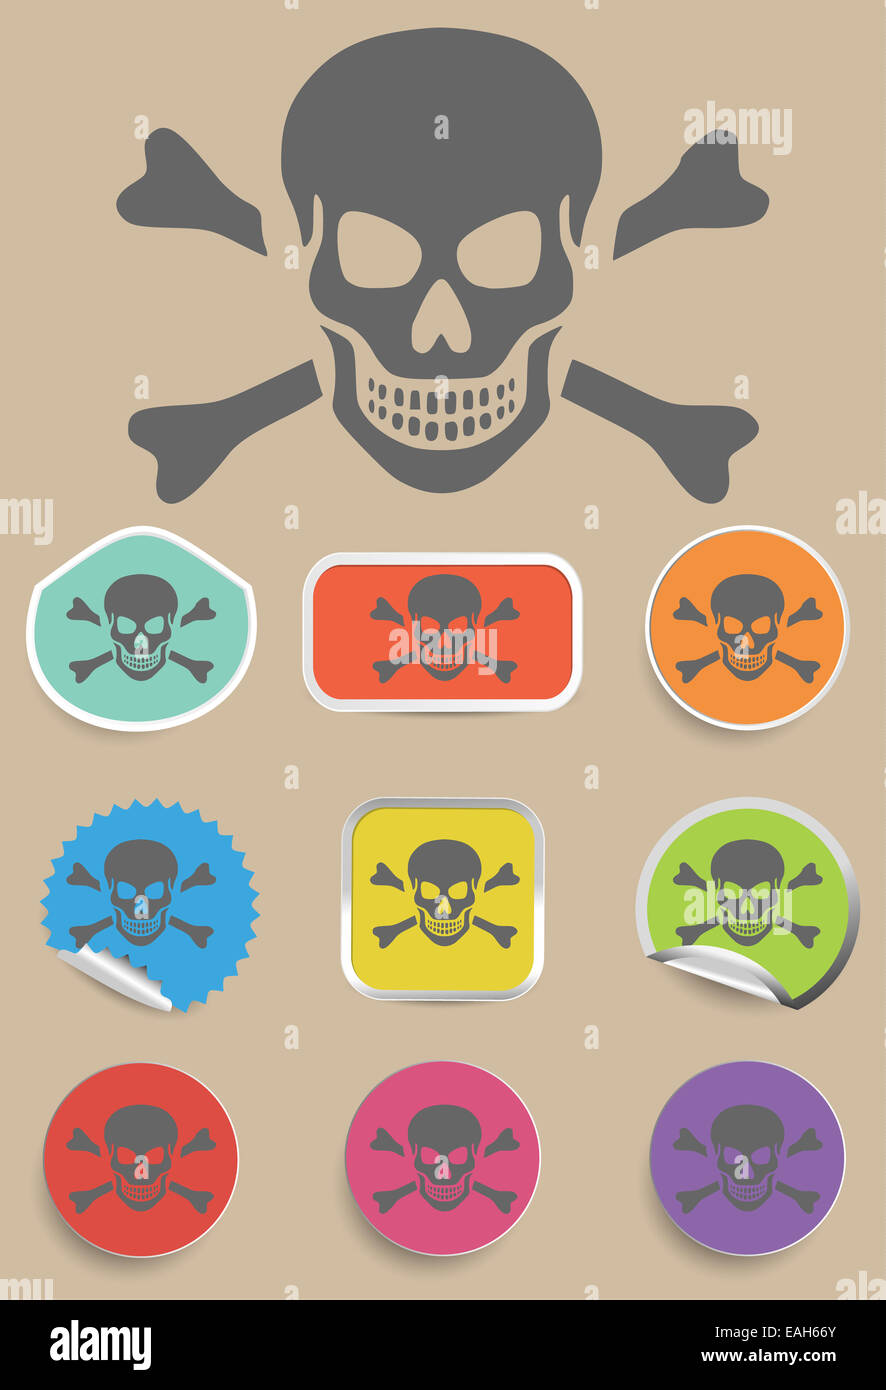 Skull and bones warning sign - vector Stock Photo